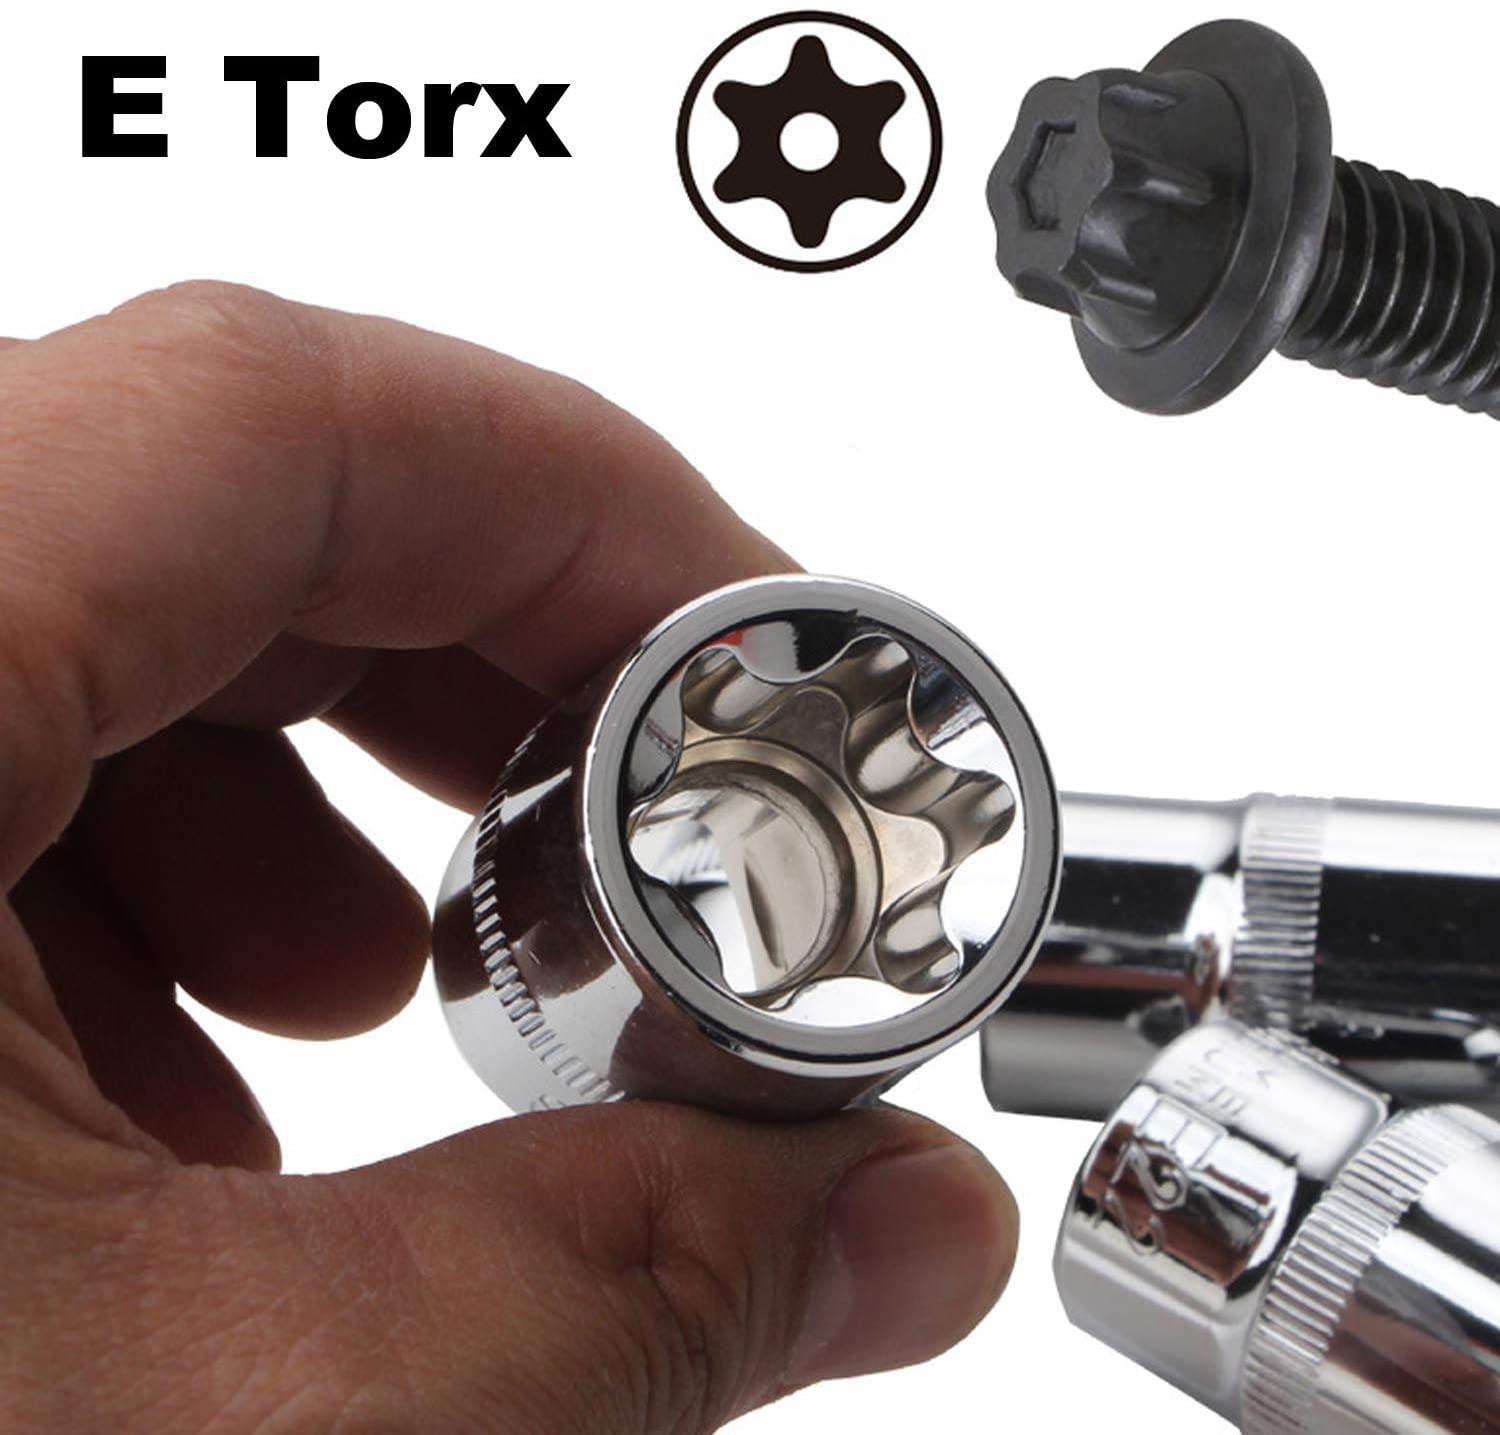 lslansoon female e torx socket set with case, 1/4, 3/8, 1/2 in. drive e4-e24 external torque star socket kit, 14pcs